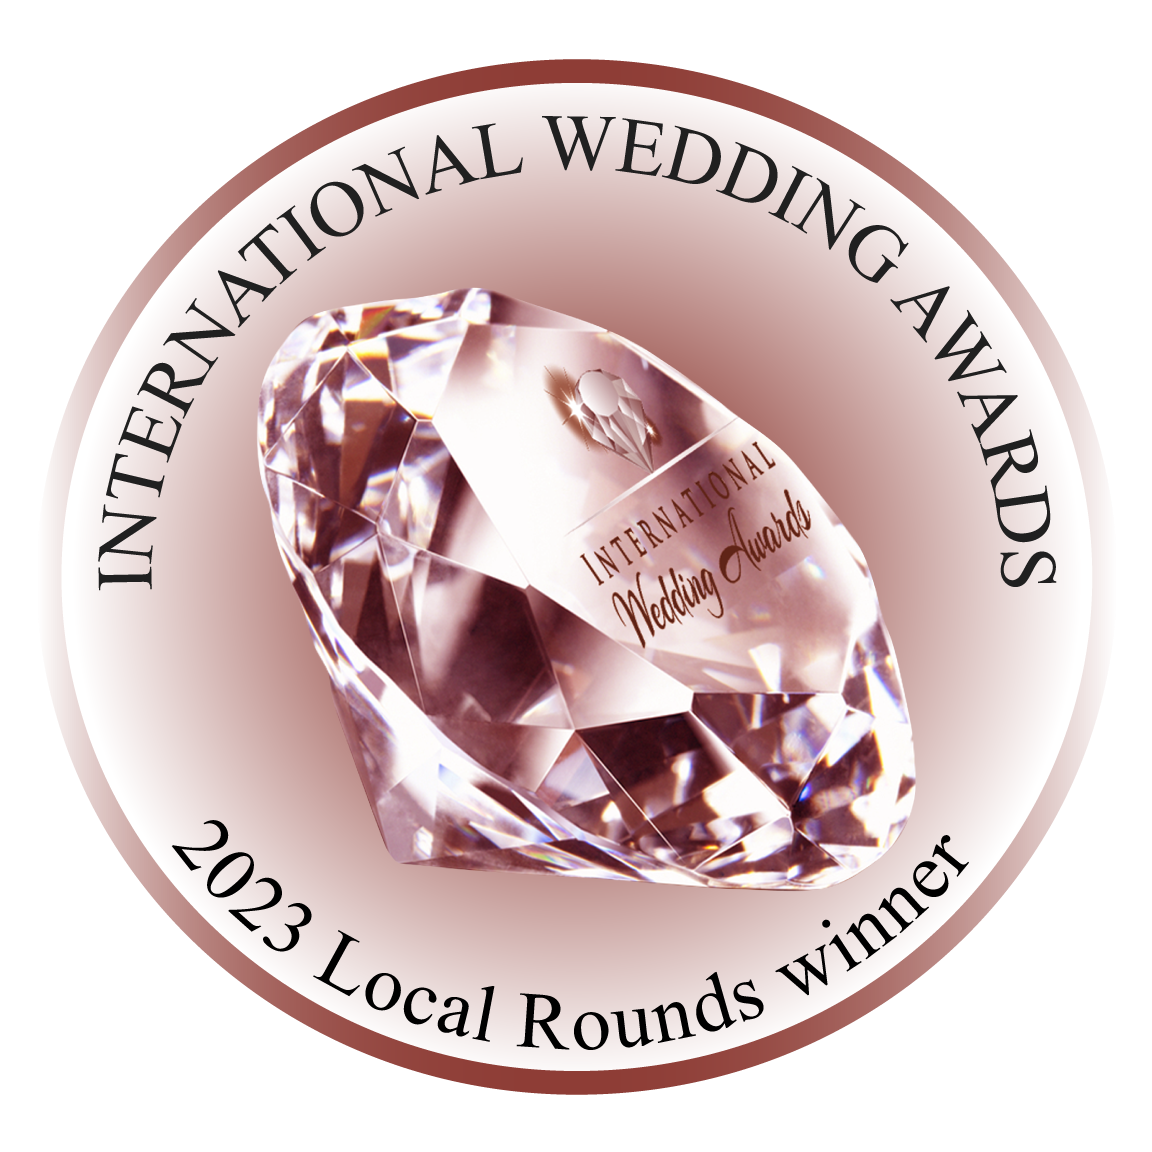 International Wedding Awards 2023 - Local Rounds Winner